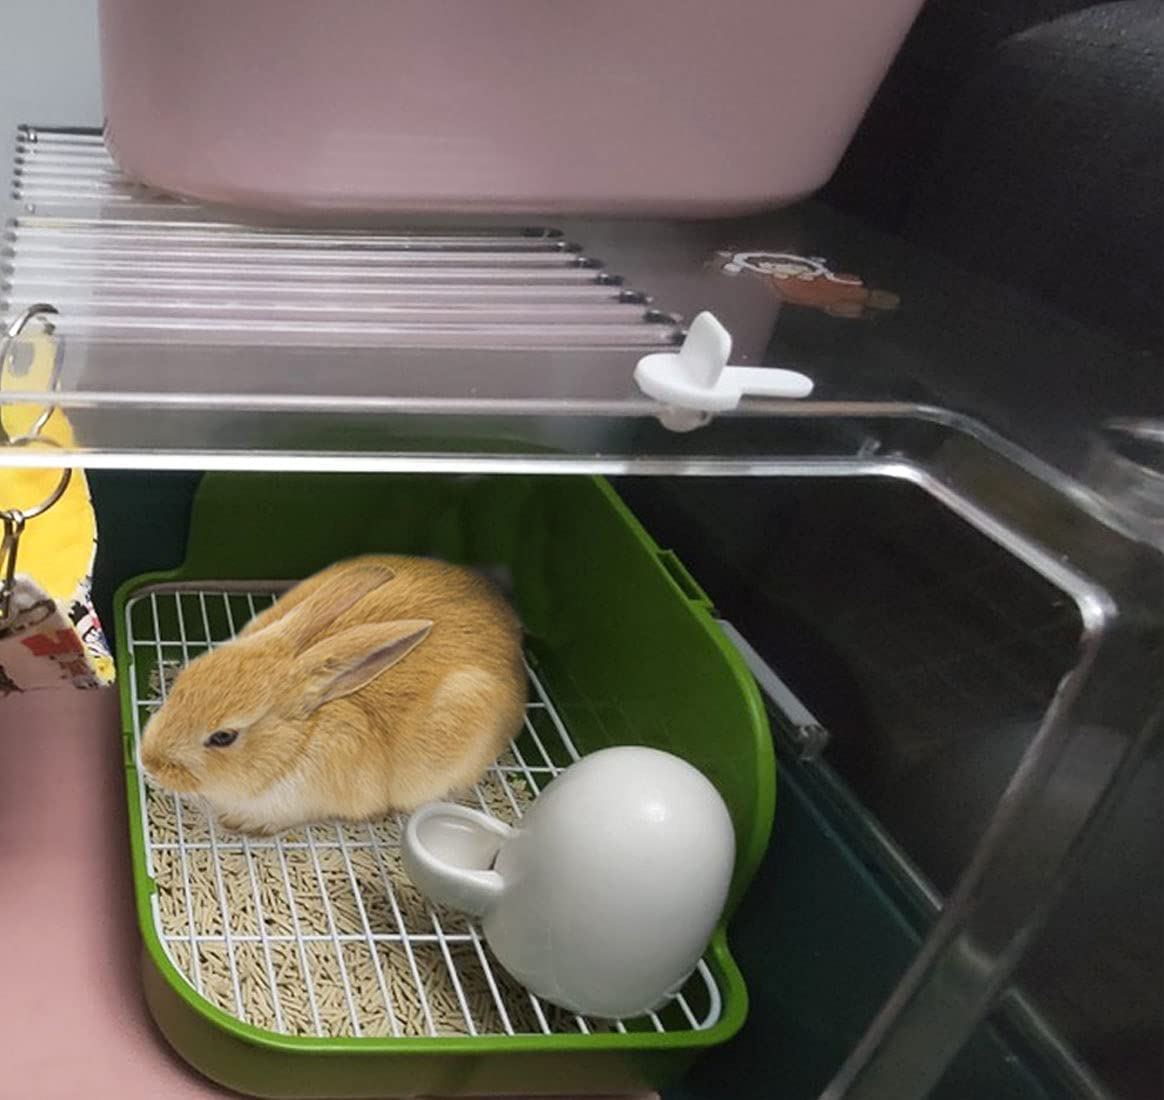 Kathson Large Rabbit Litter Box, Pets Toilet Potty Trainer Tray Corner –  KOL PET